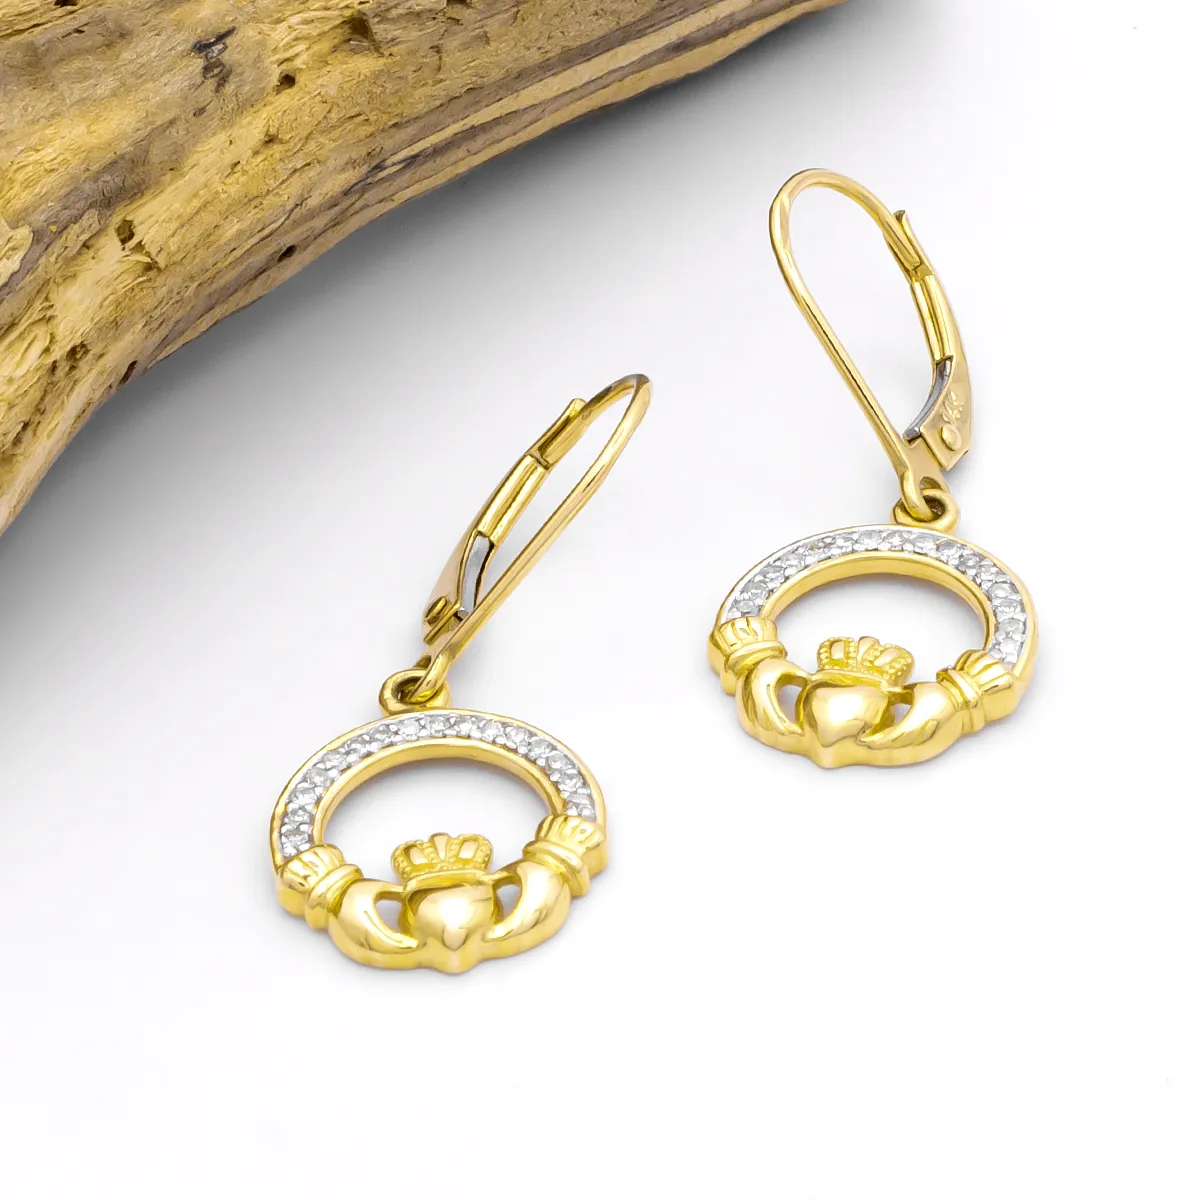 IJCE0012 Yellow Gold Claddagh Ring Earrings 2